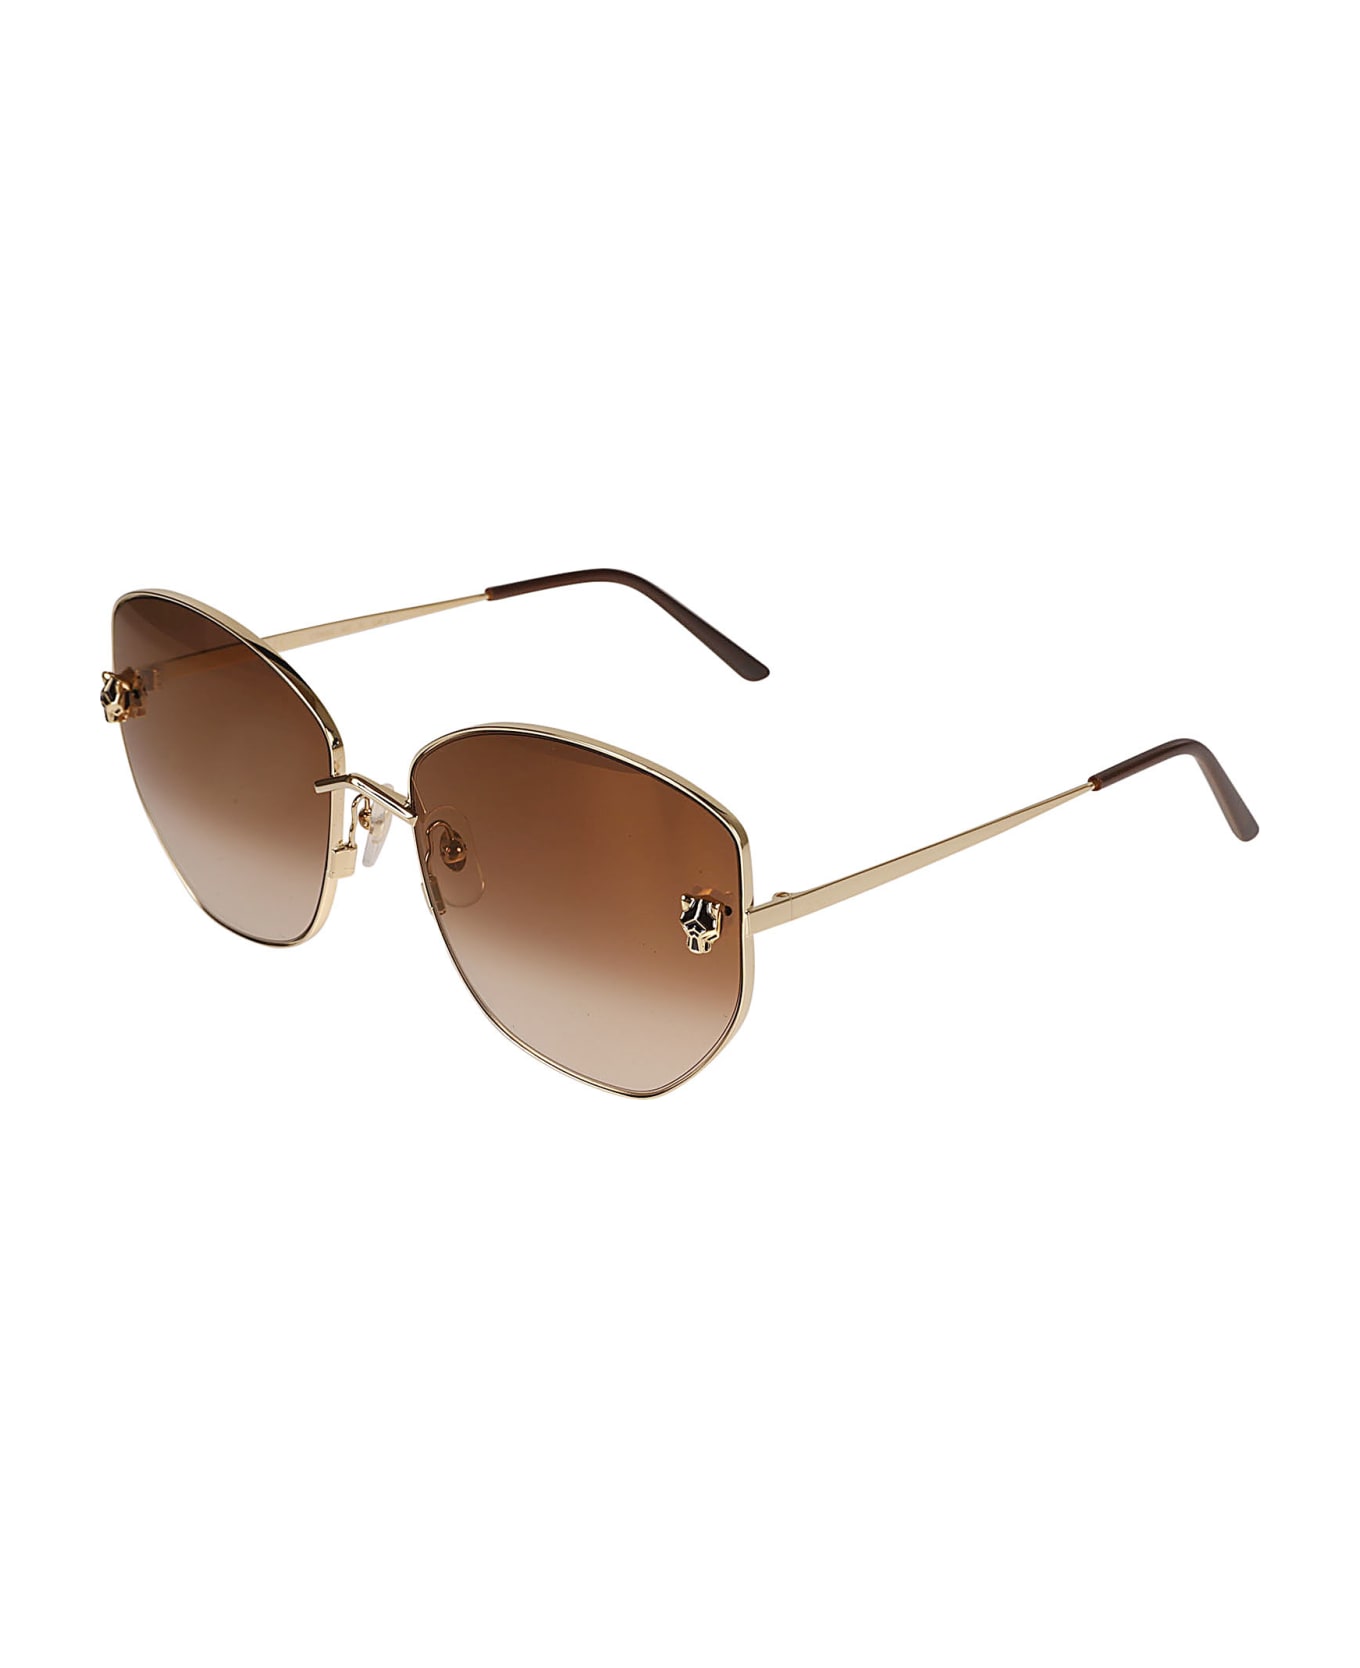 Cartier Eyewear Butterfly Classic Sunglasses - 002 gold gold brown